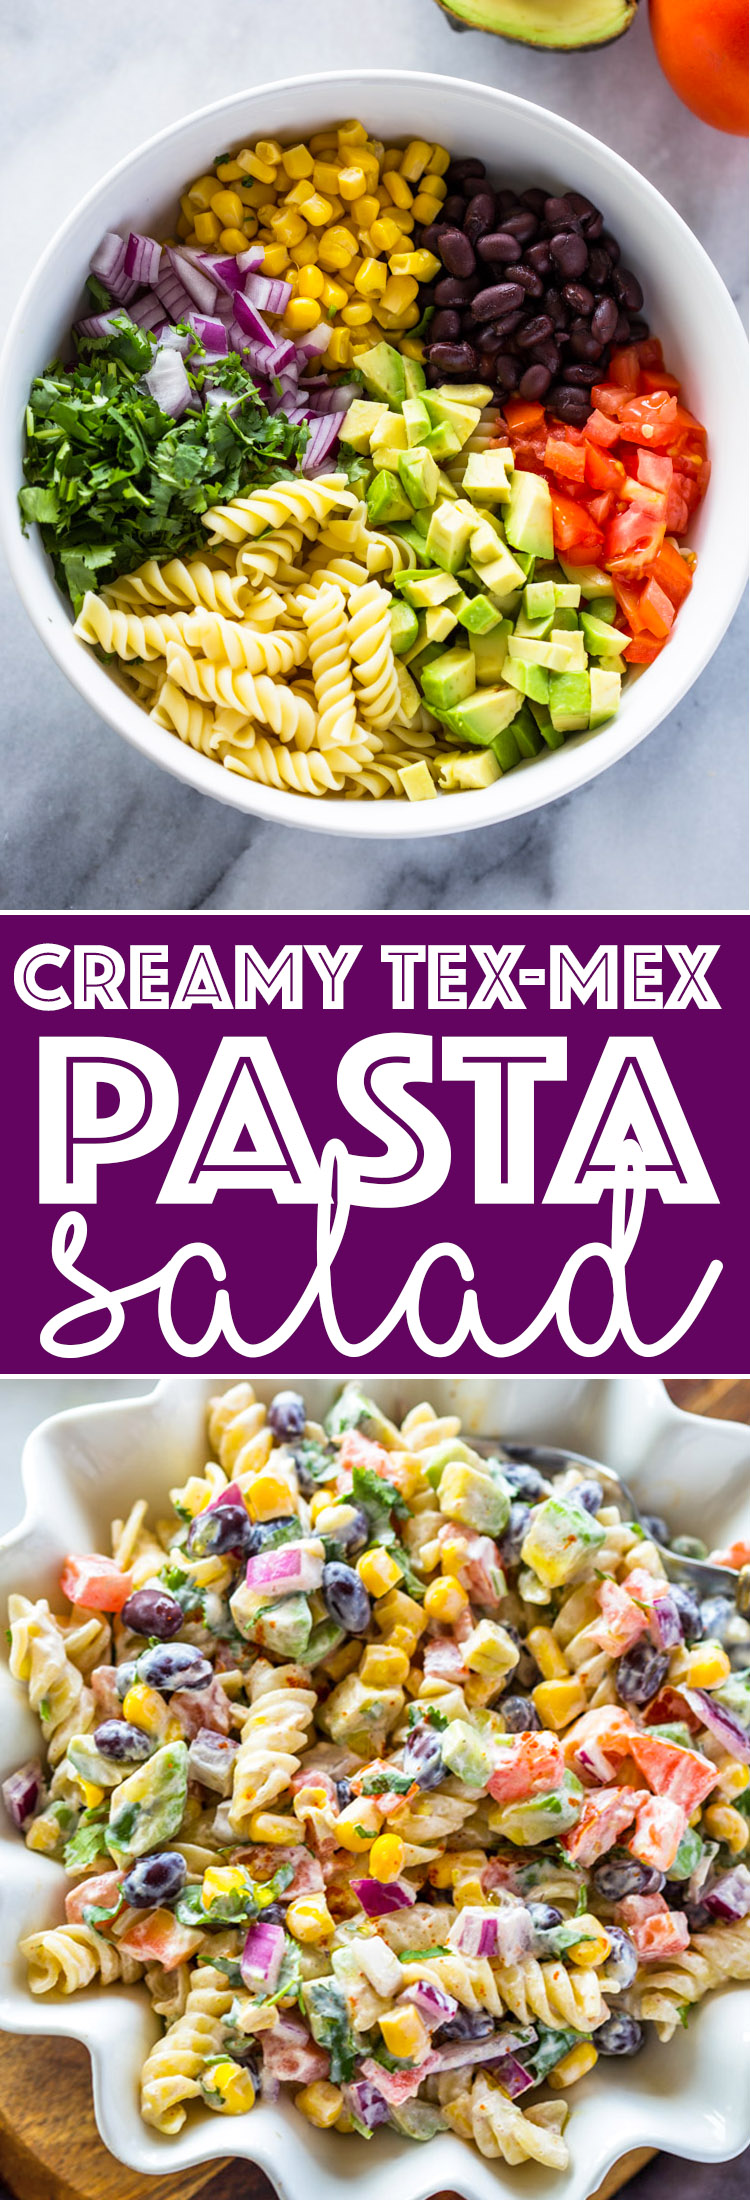 Creamy Tex-Mex Pasta Salad